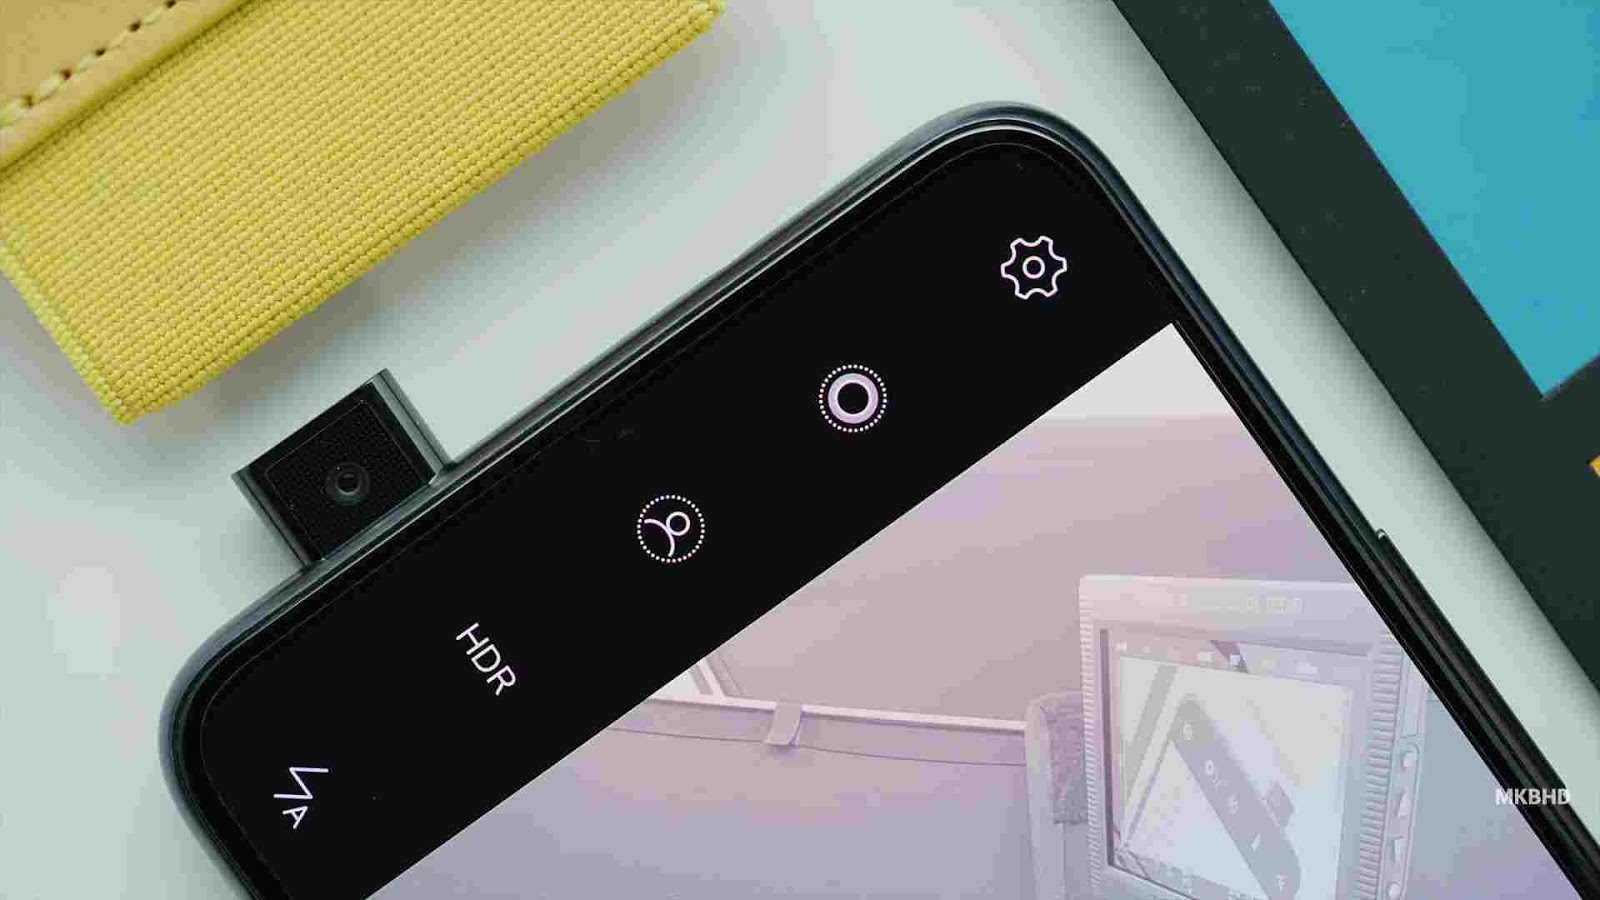 The New Complete Bezeless Vivo Nex S Smart Phone